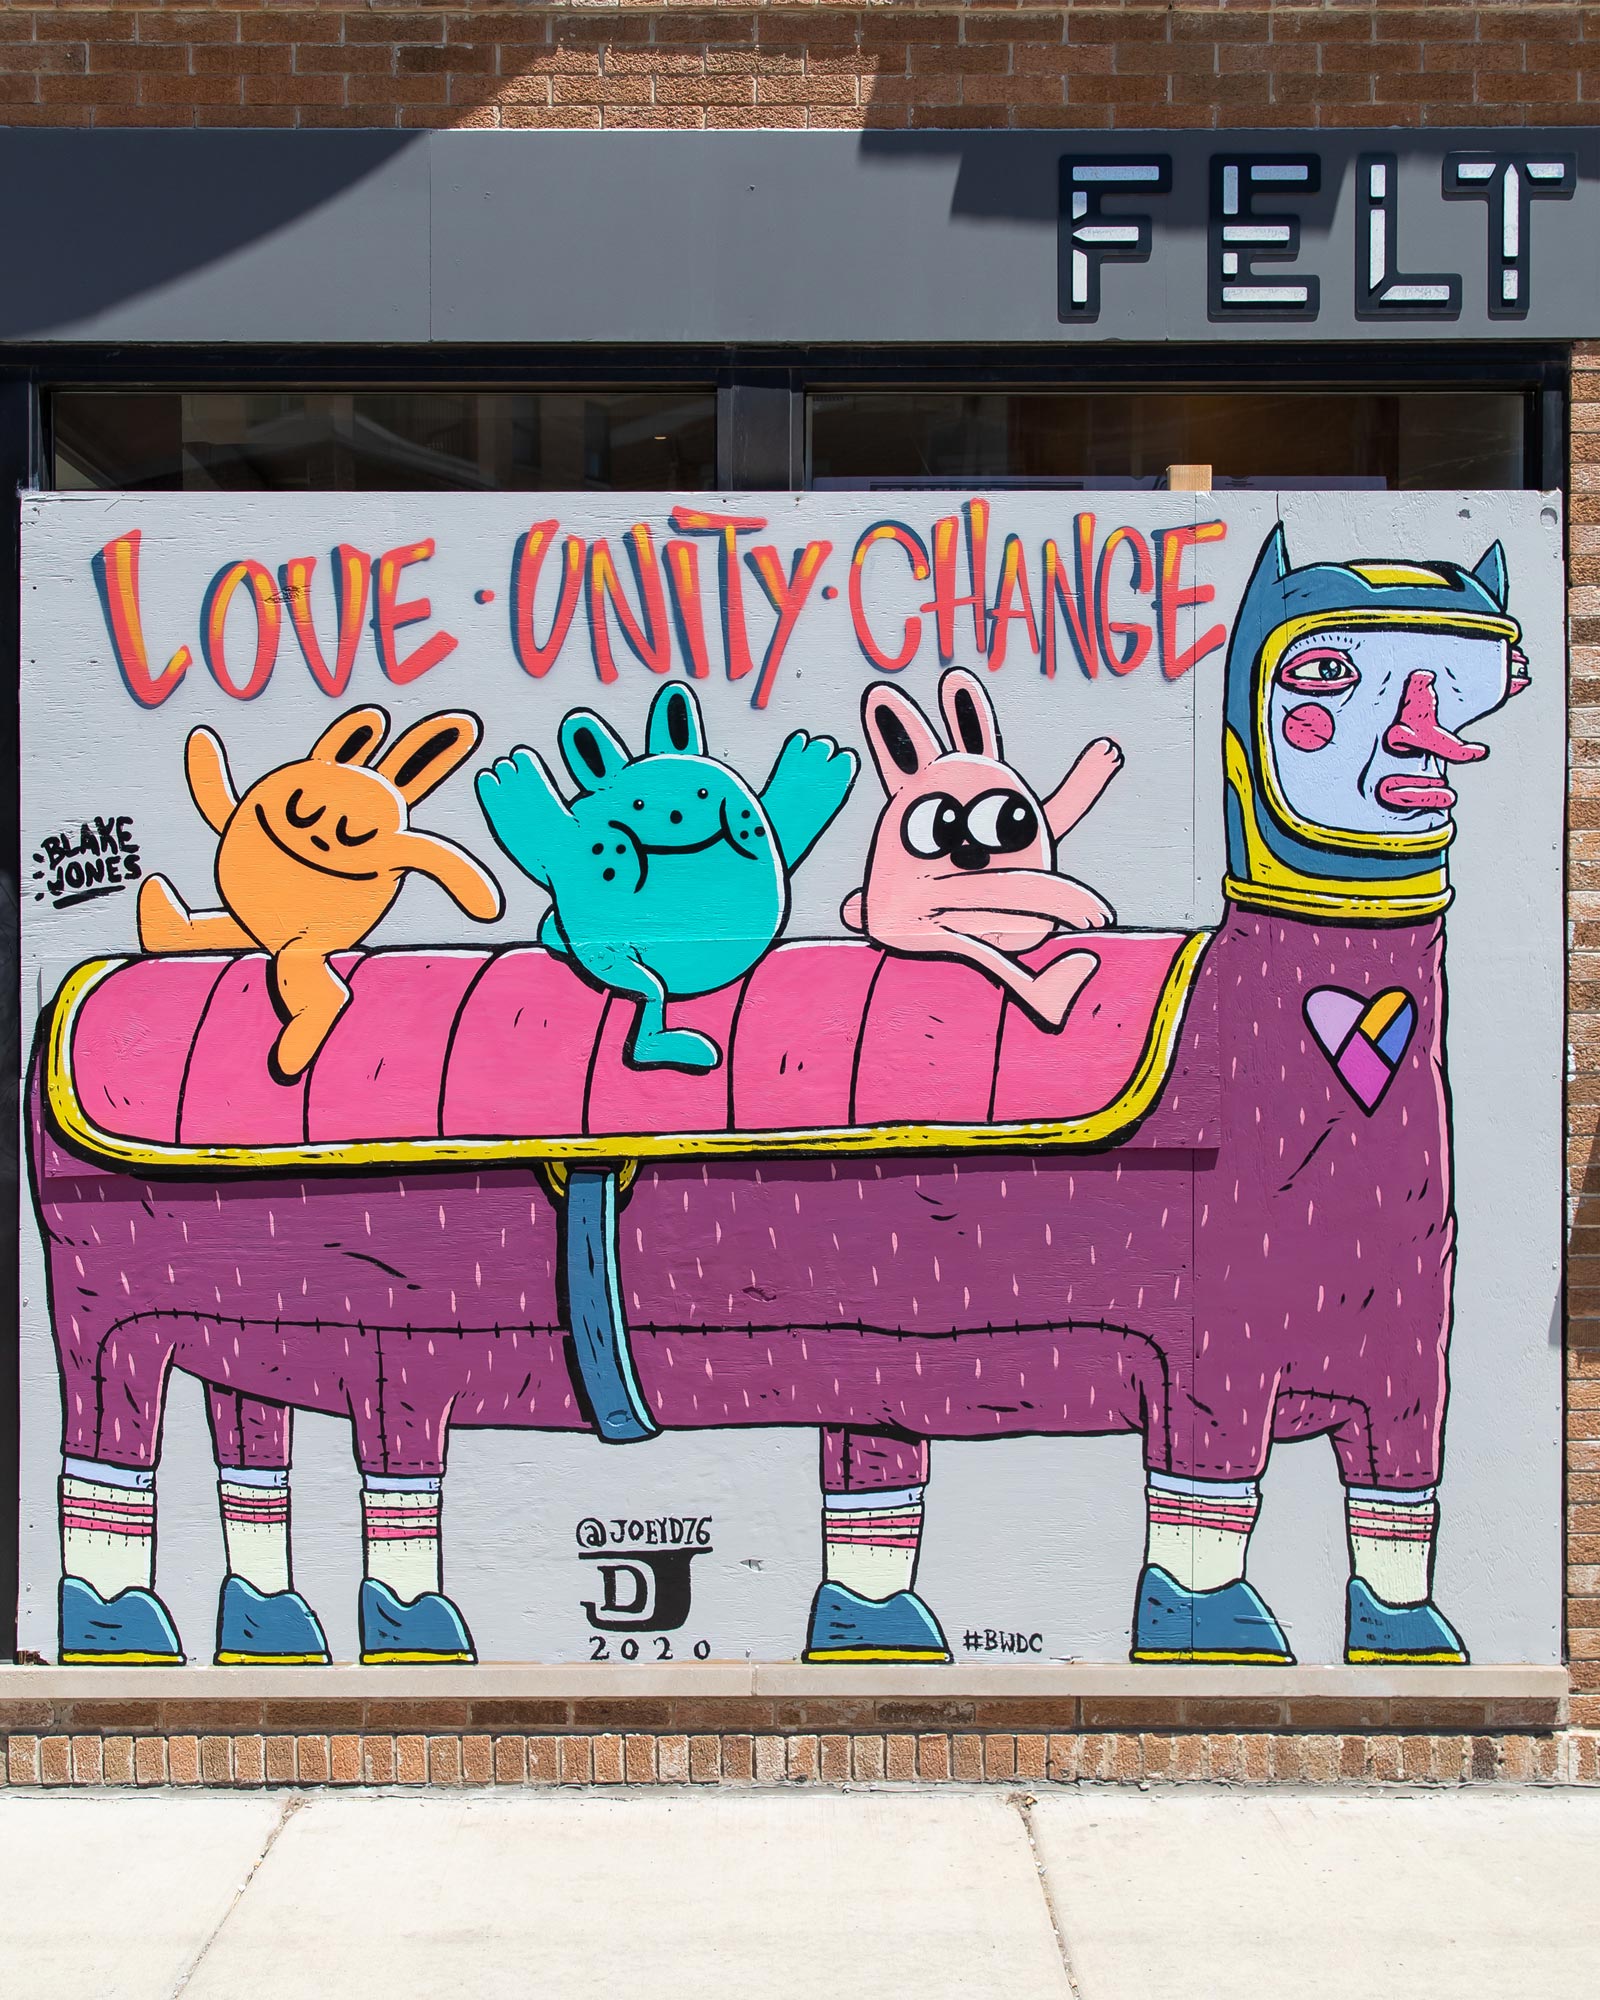 Love Unity Change Mural Felt Chicago BLM